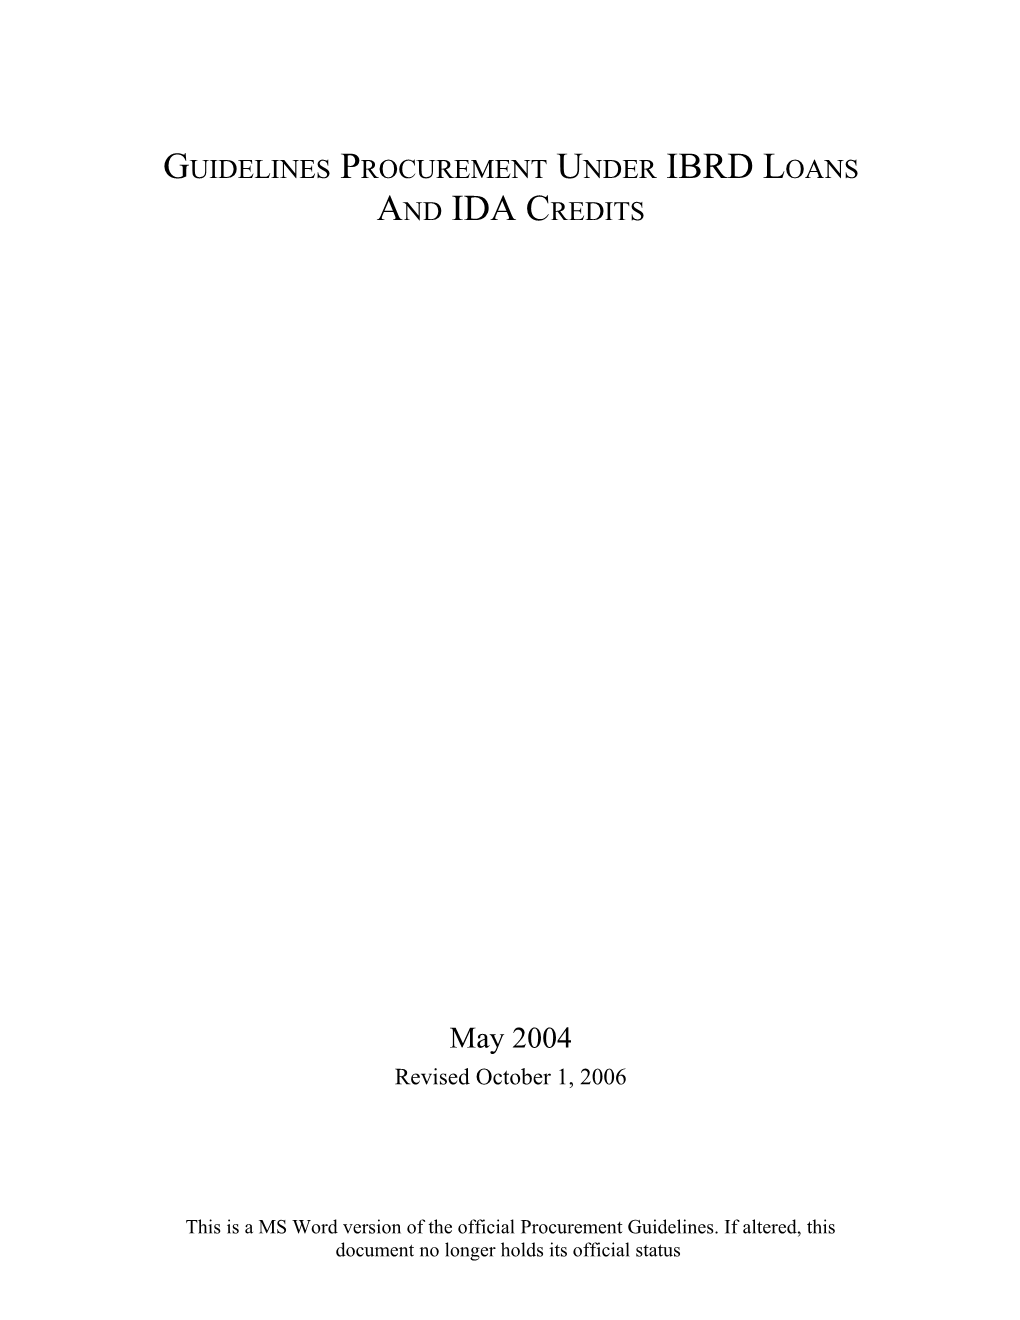 Guidelines Procurement Under IBRD Loans and IDA Credits